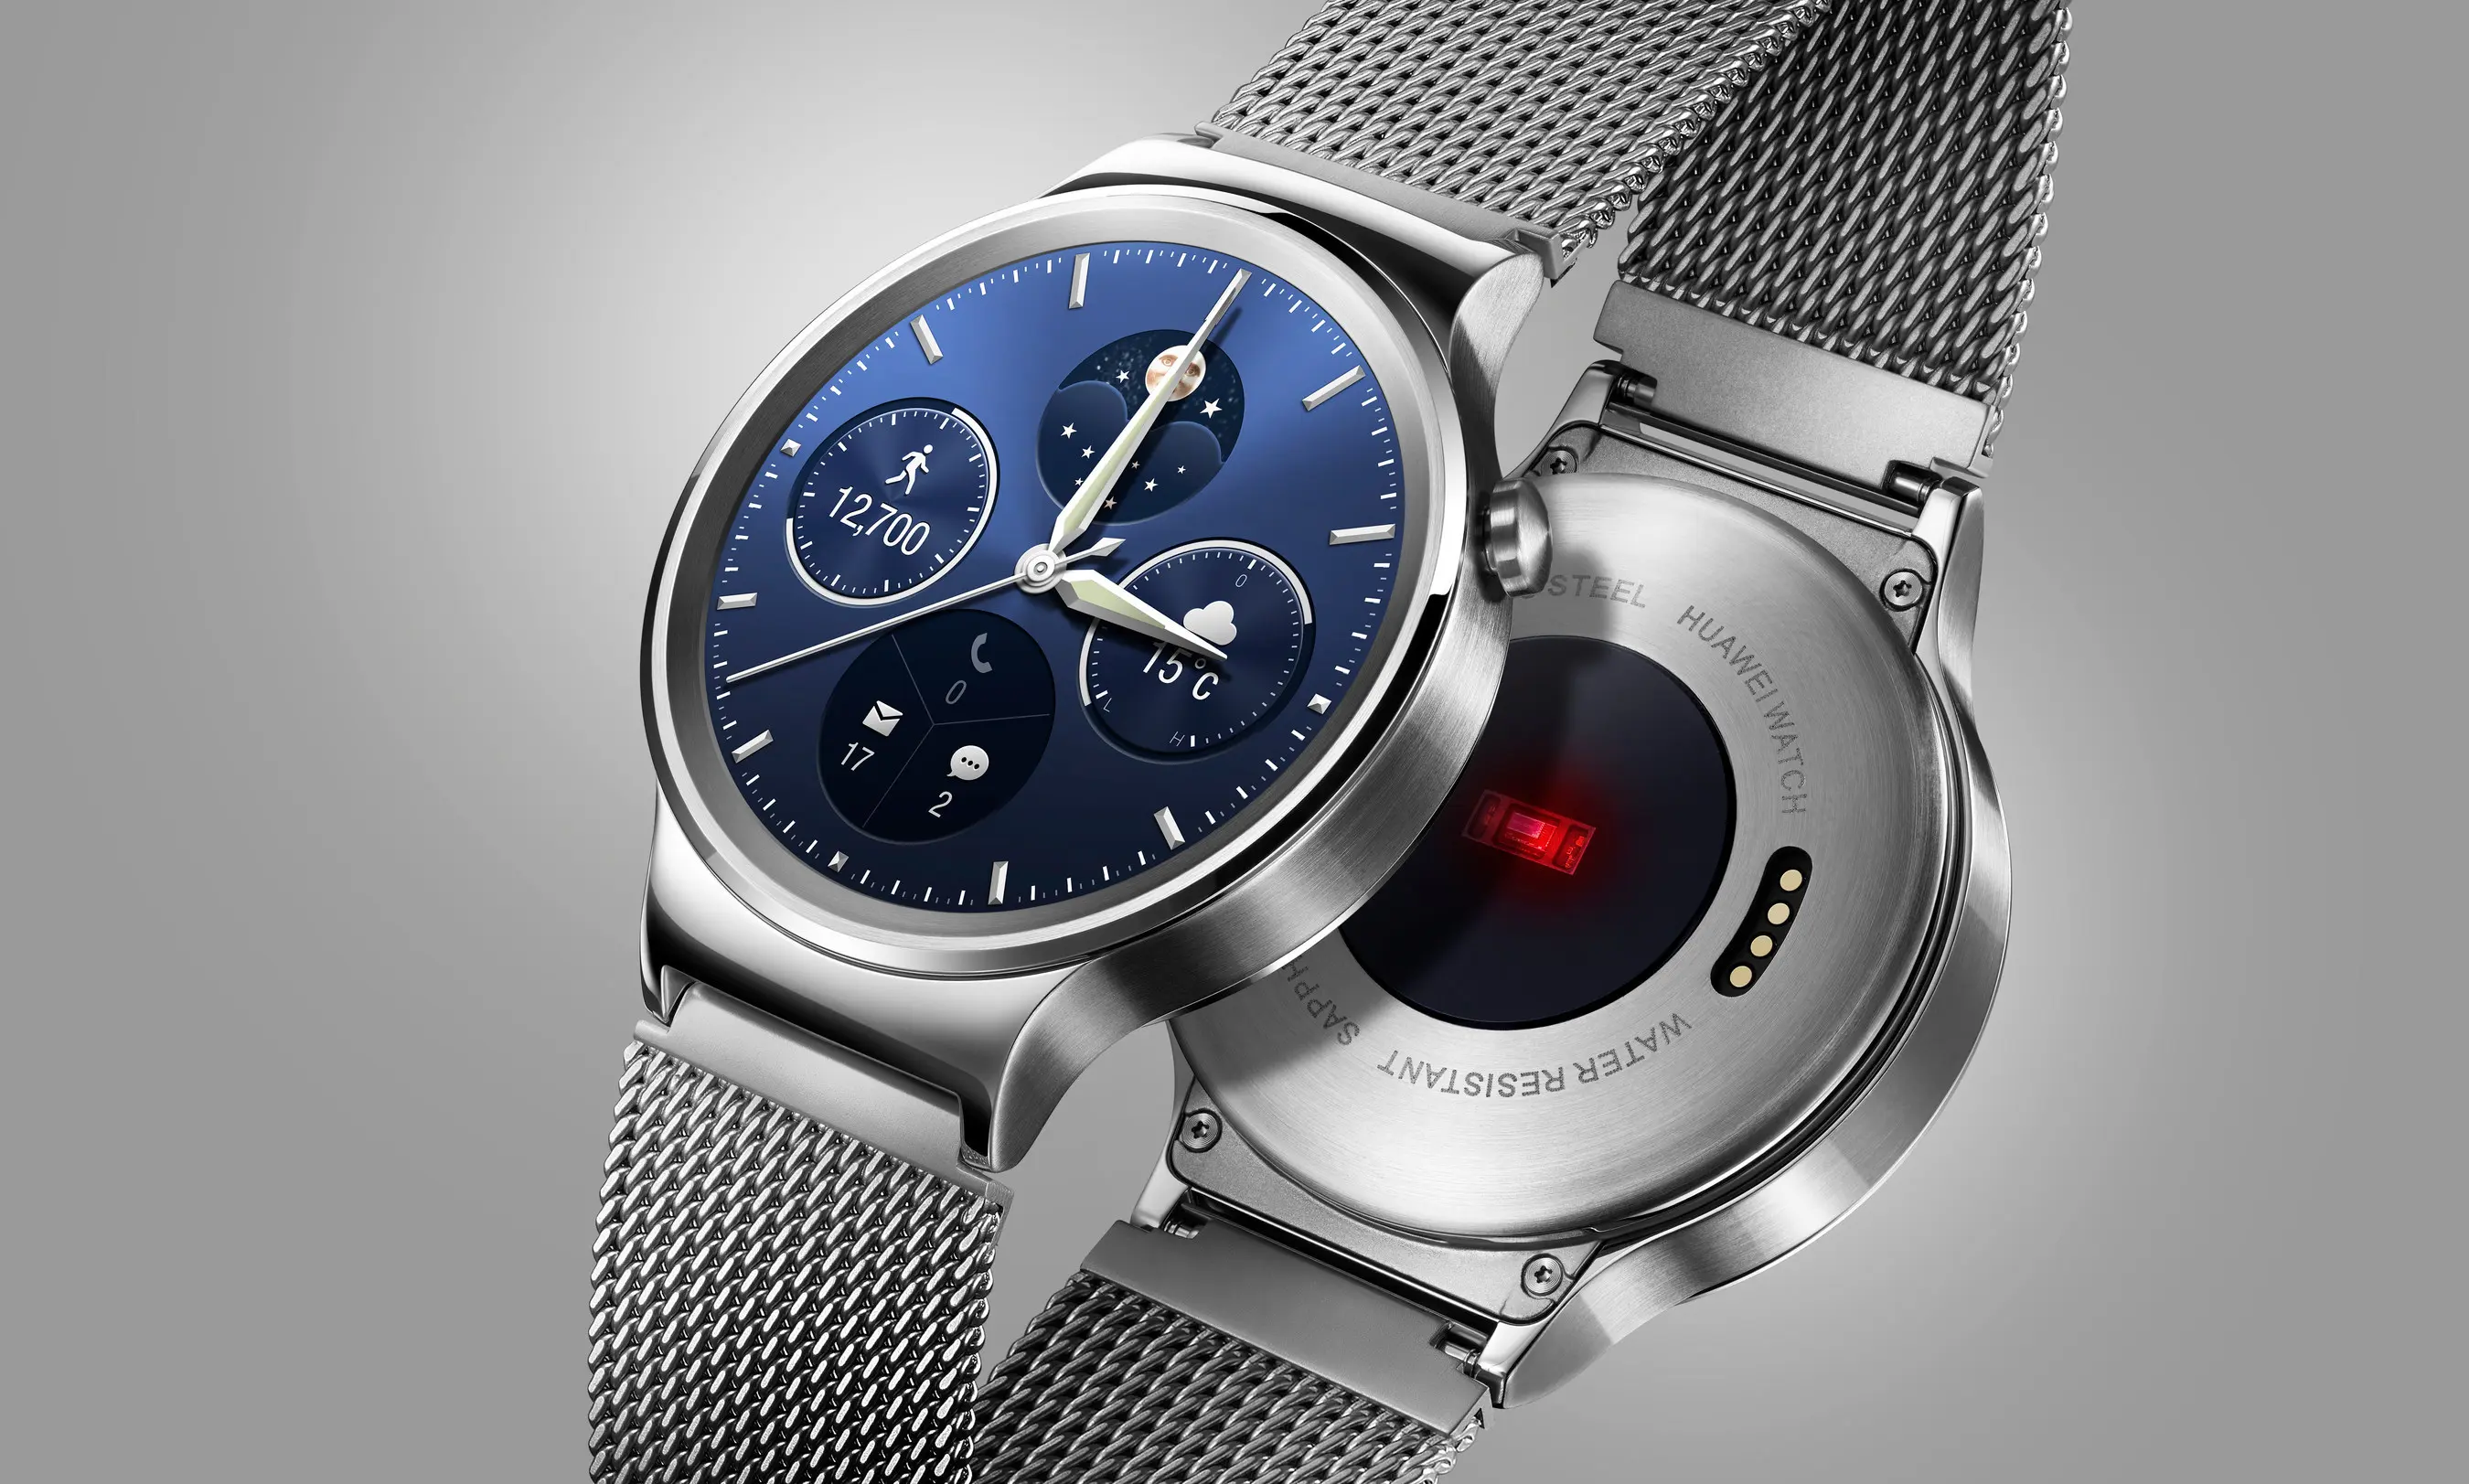 Huawei Watch recibe finalmente Android Wear 2.0